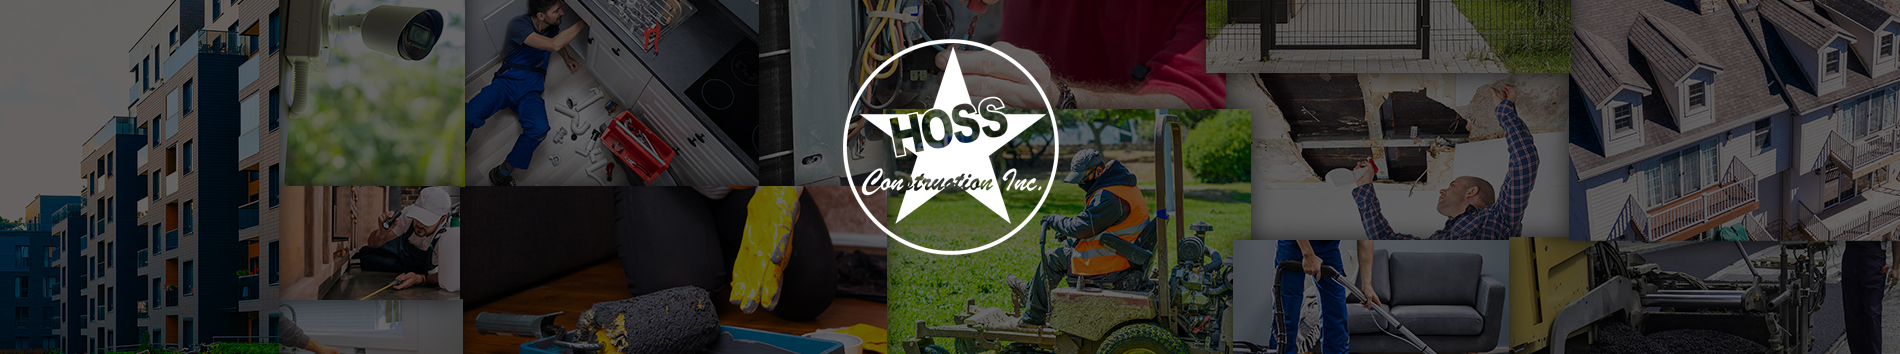 Hoss Construction, Inc.